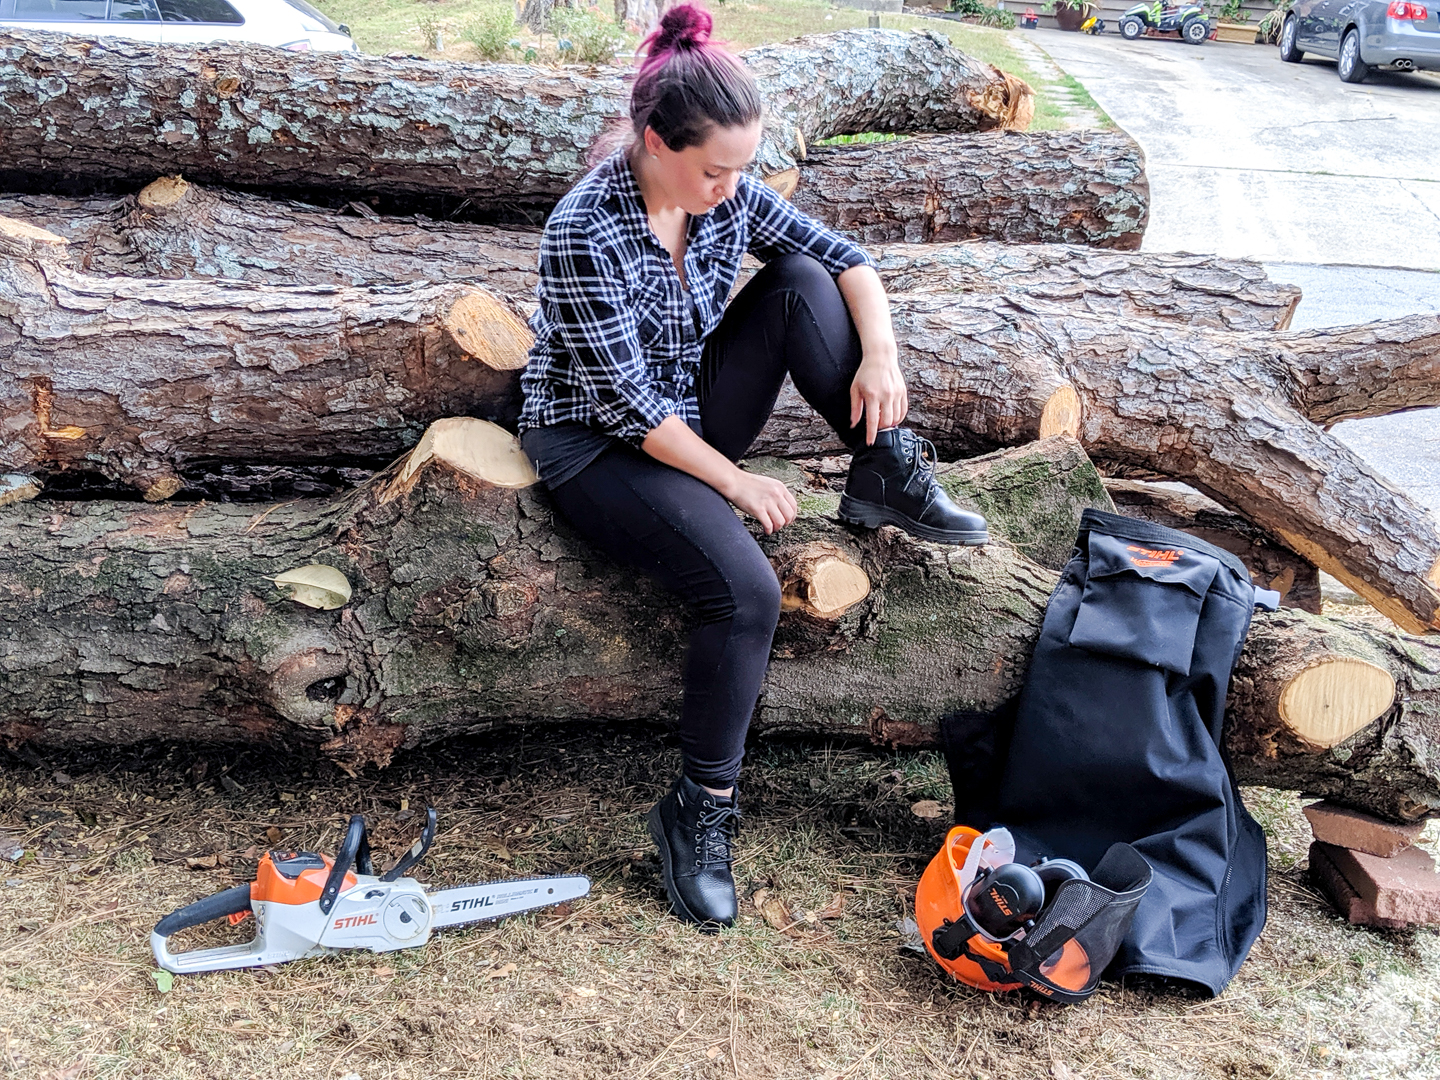 Sarah Fogle with chainsaw gear